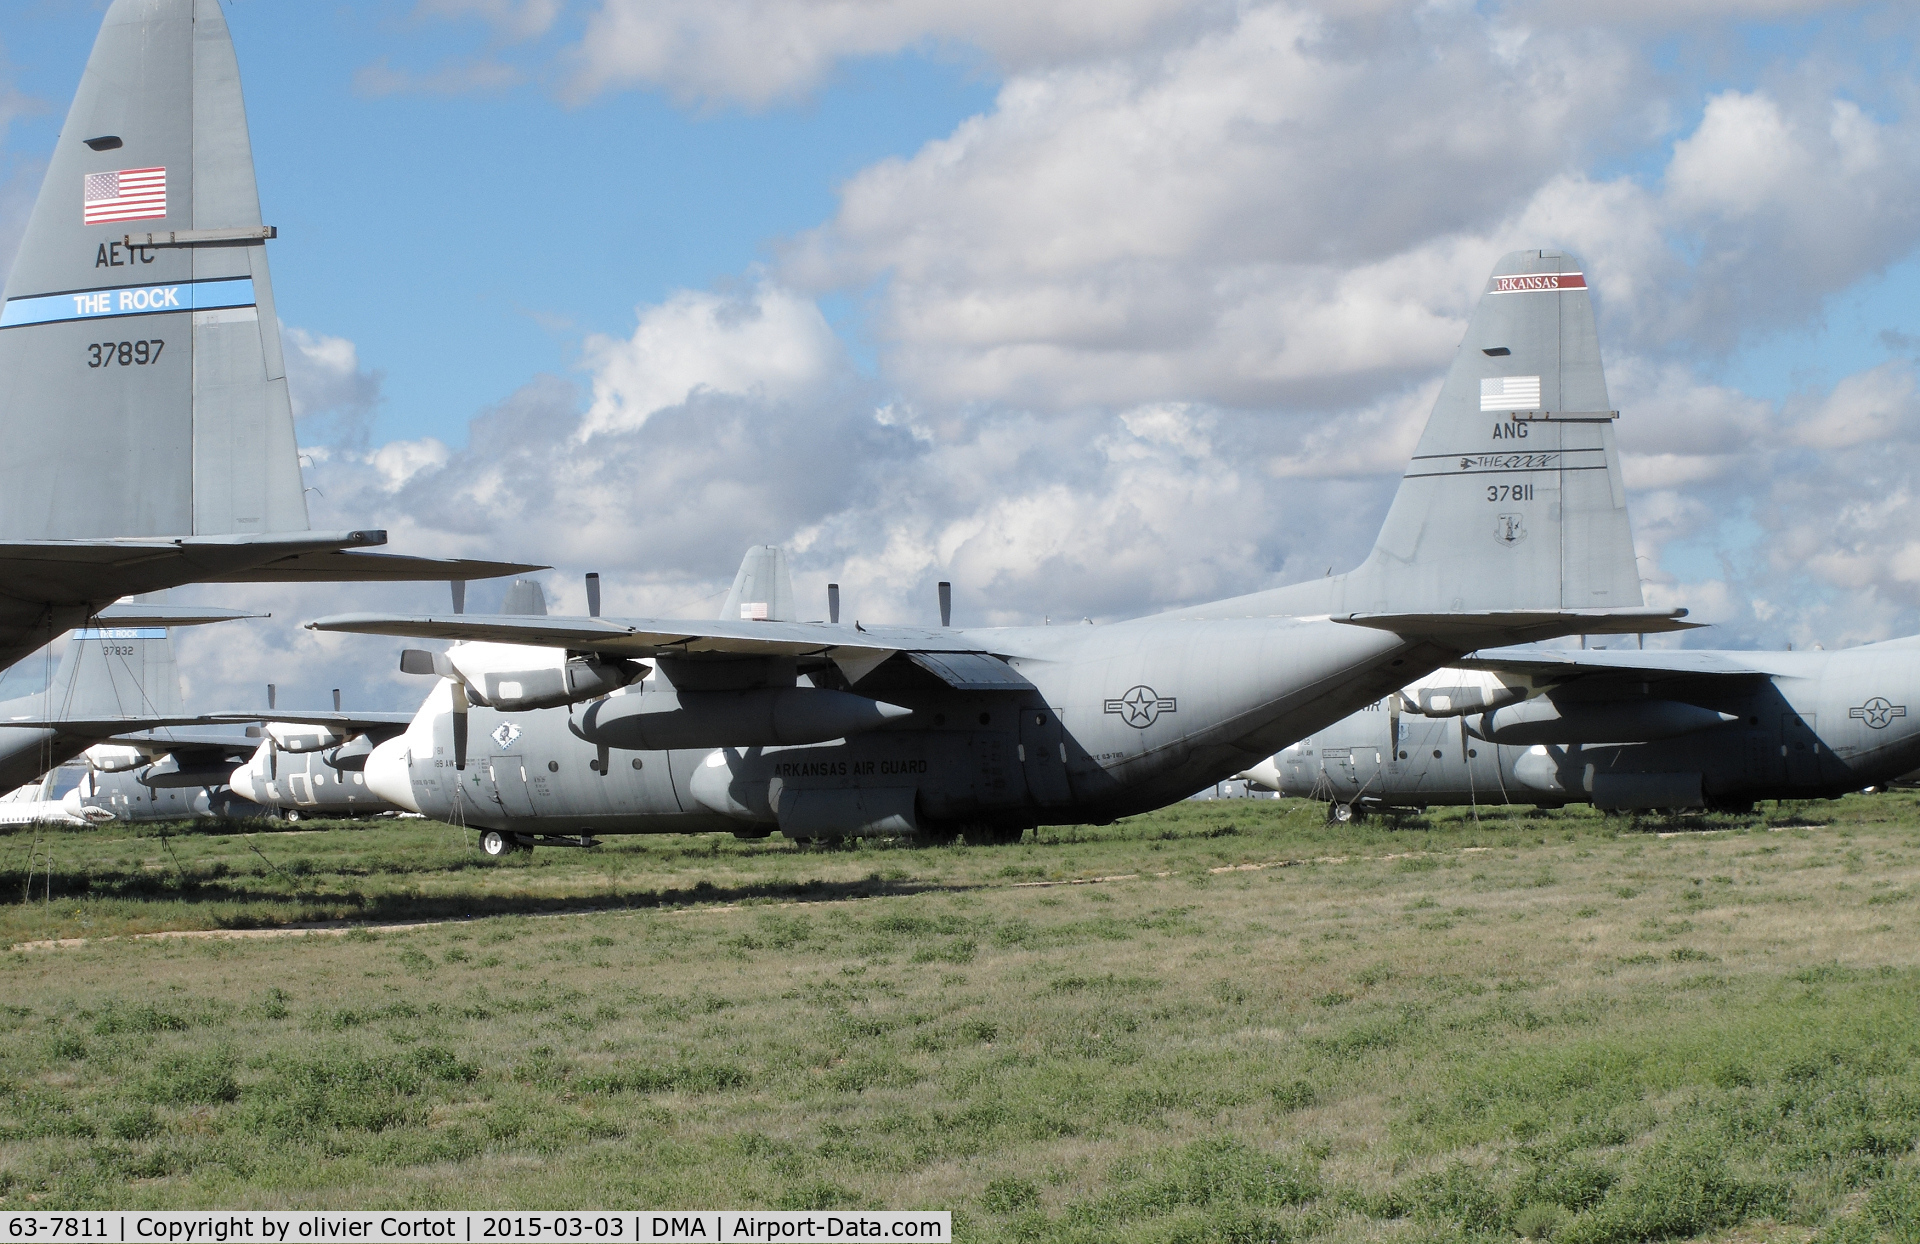 63-7811, Lockheed C-130E Hercules C/N 382-3881, left side